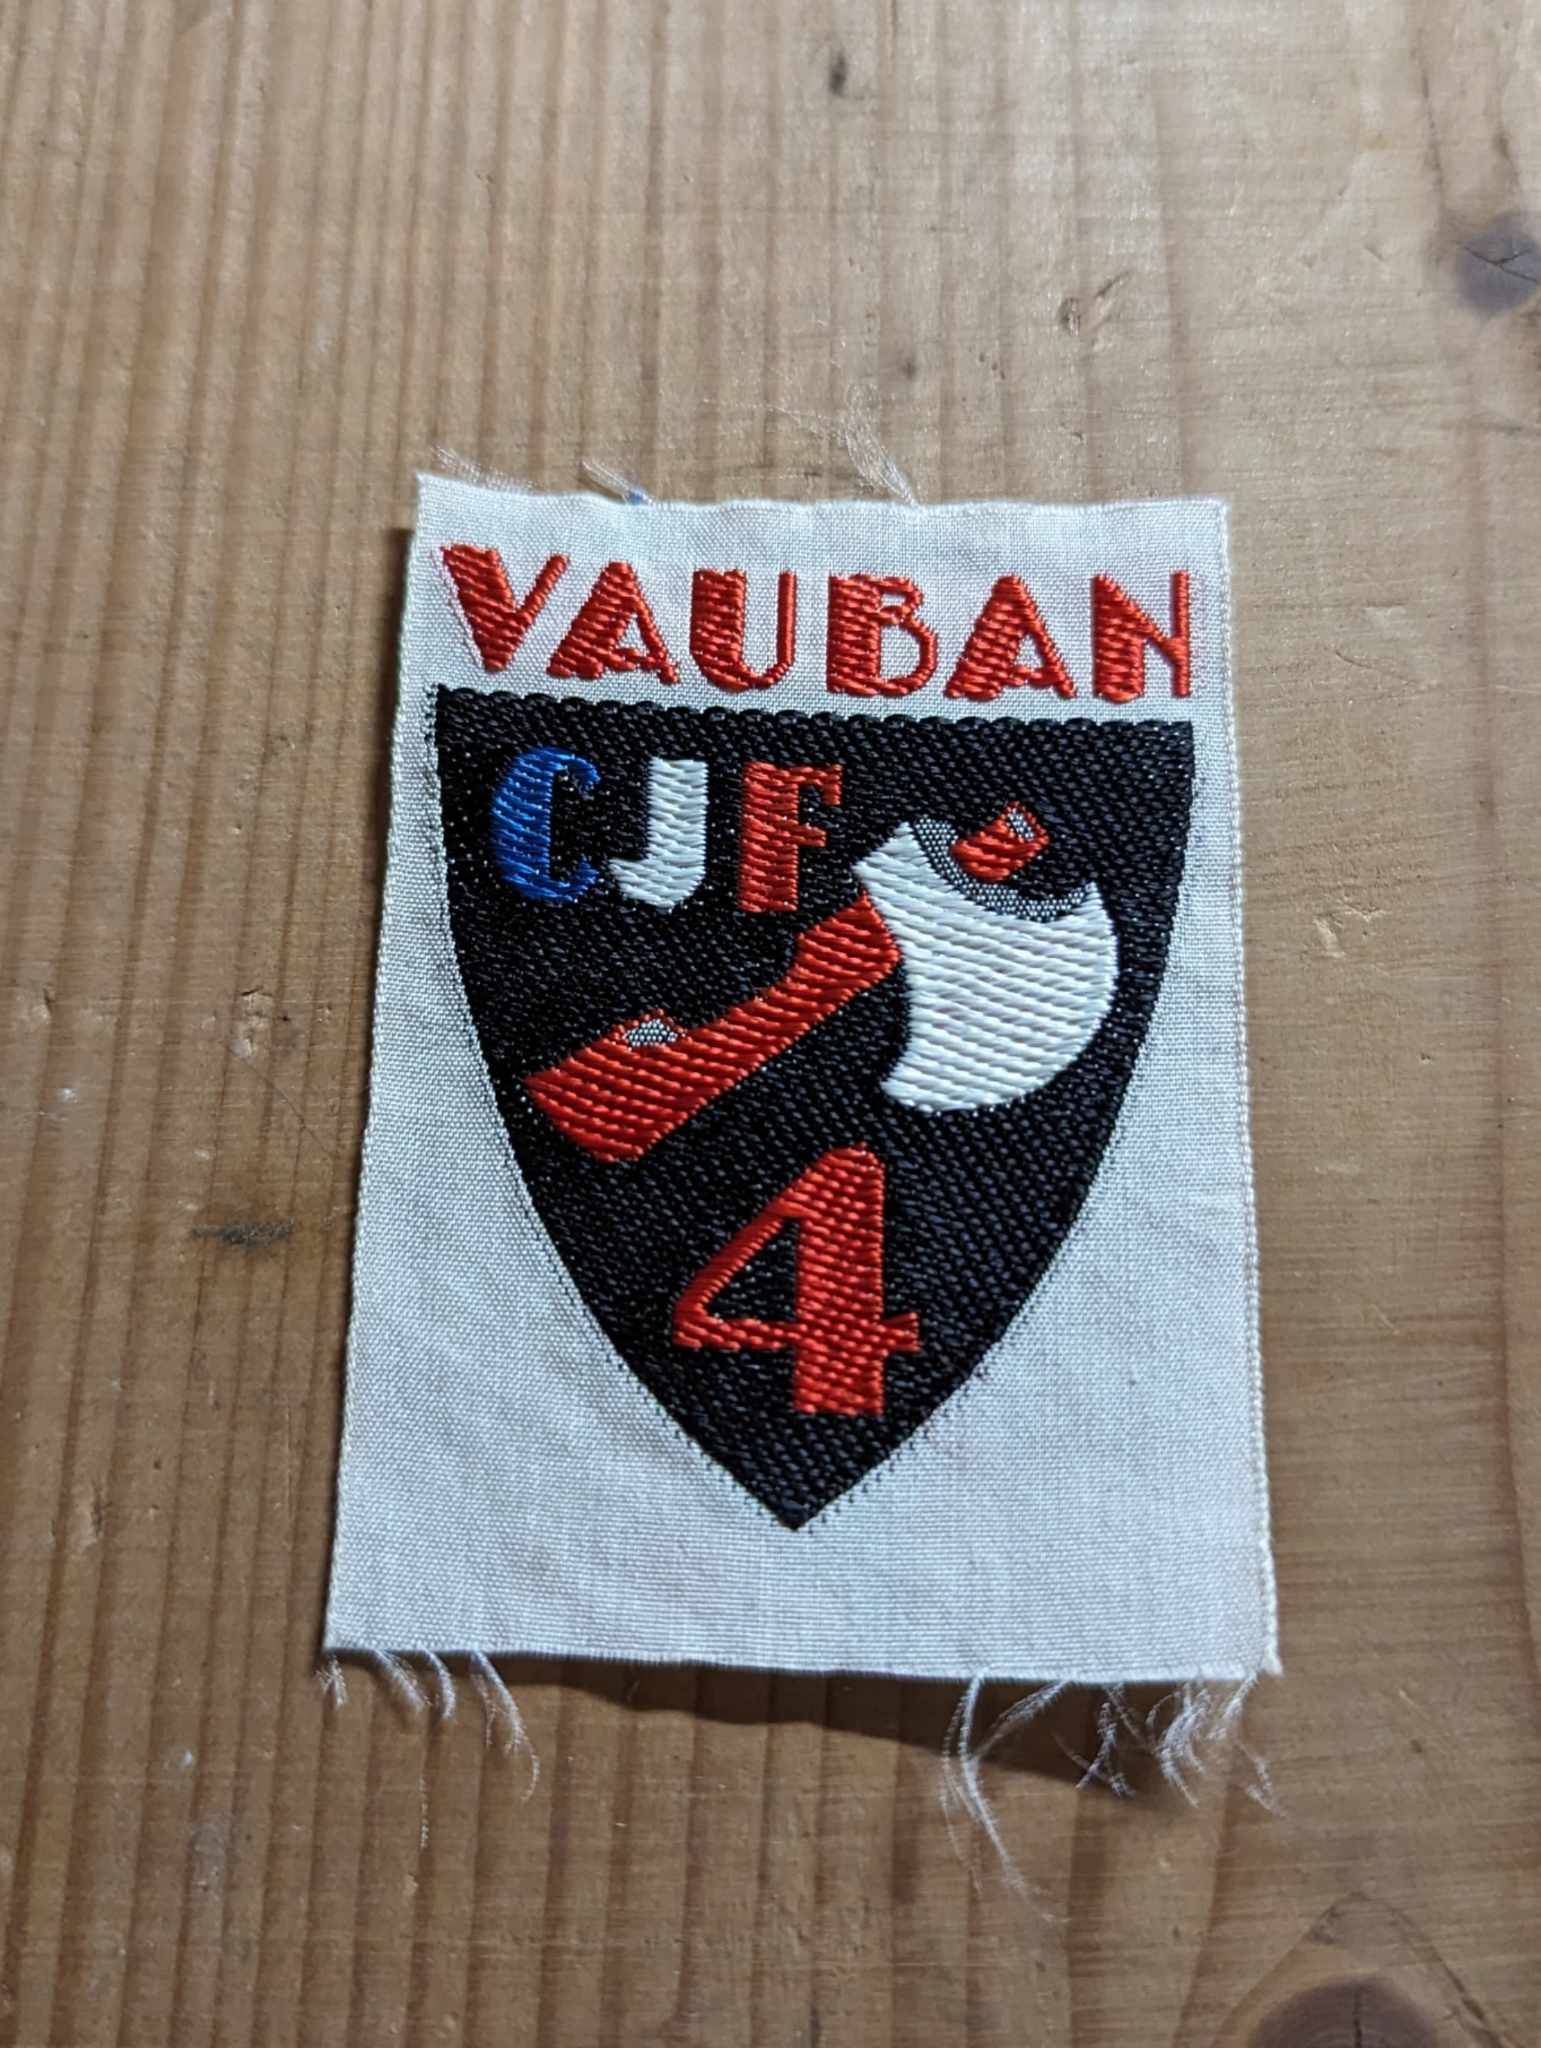 militaria : Insigne tissus CJF 4 Vauban / ww2 CJF 4 Vauban fabric patch